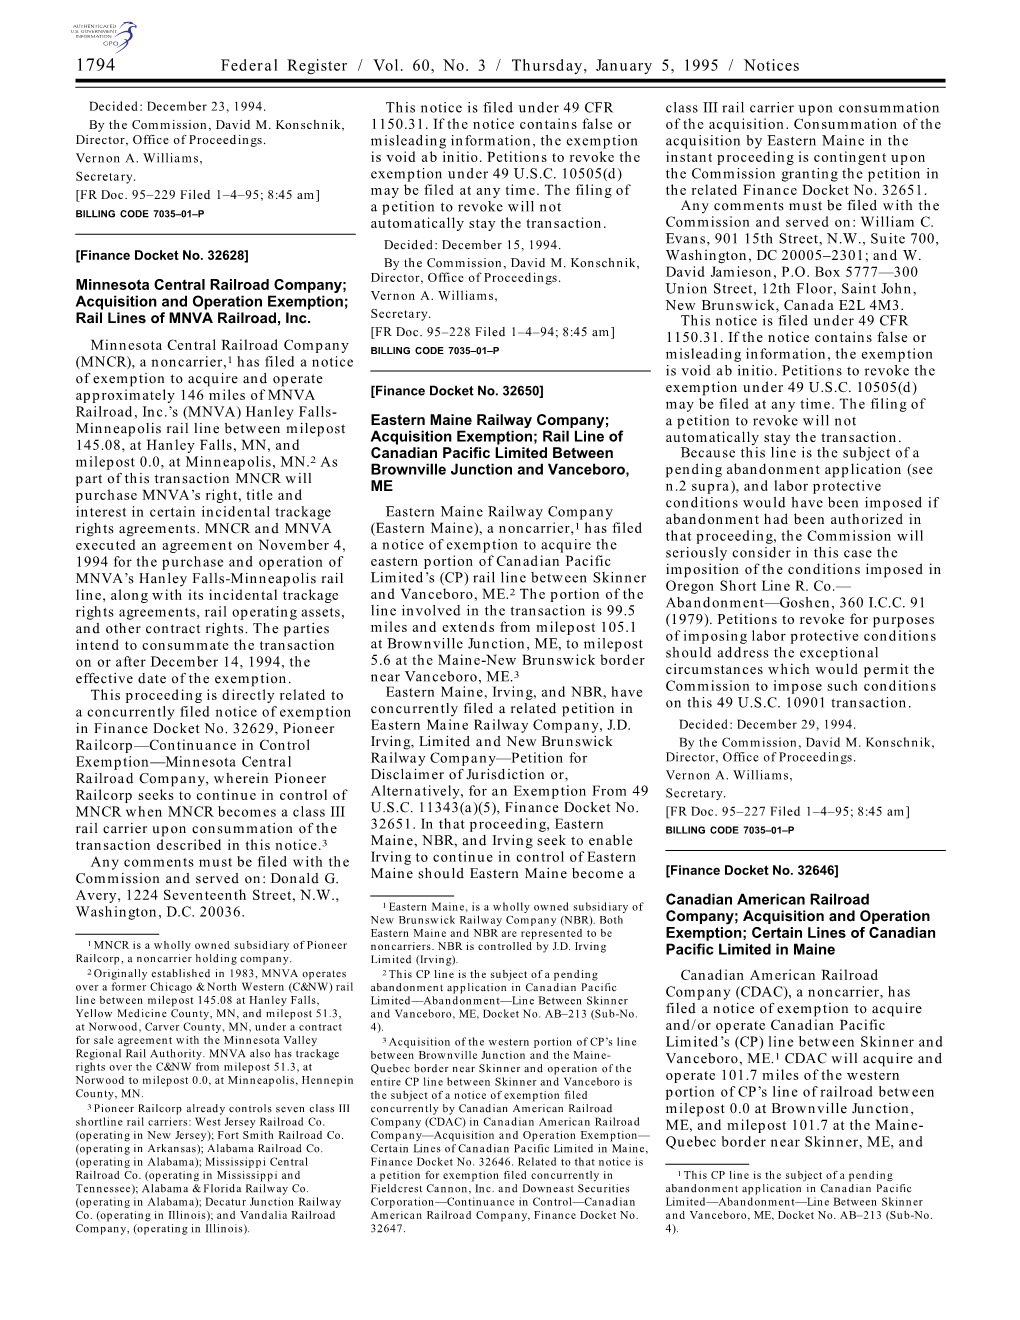 Federal Register / Vol. 60, No. 3 / Thursday, January 5, 1995 / Notices